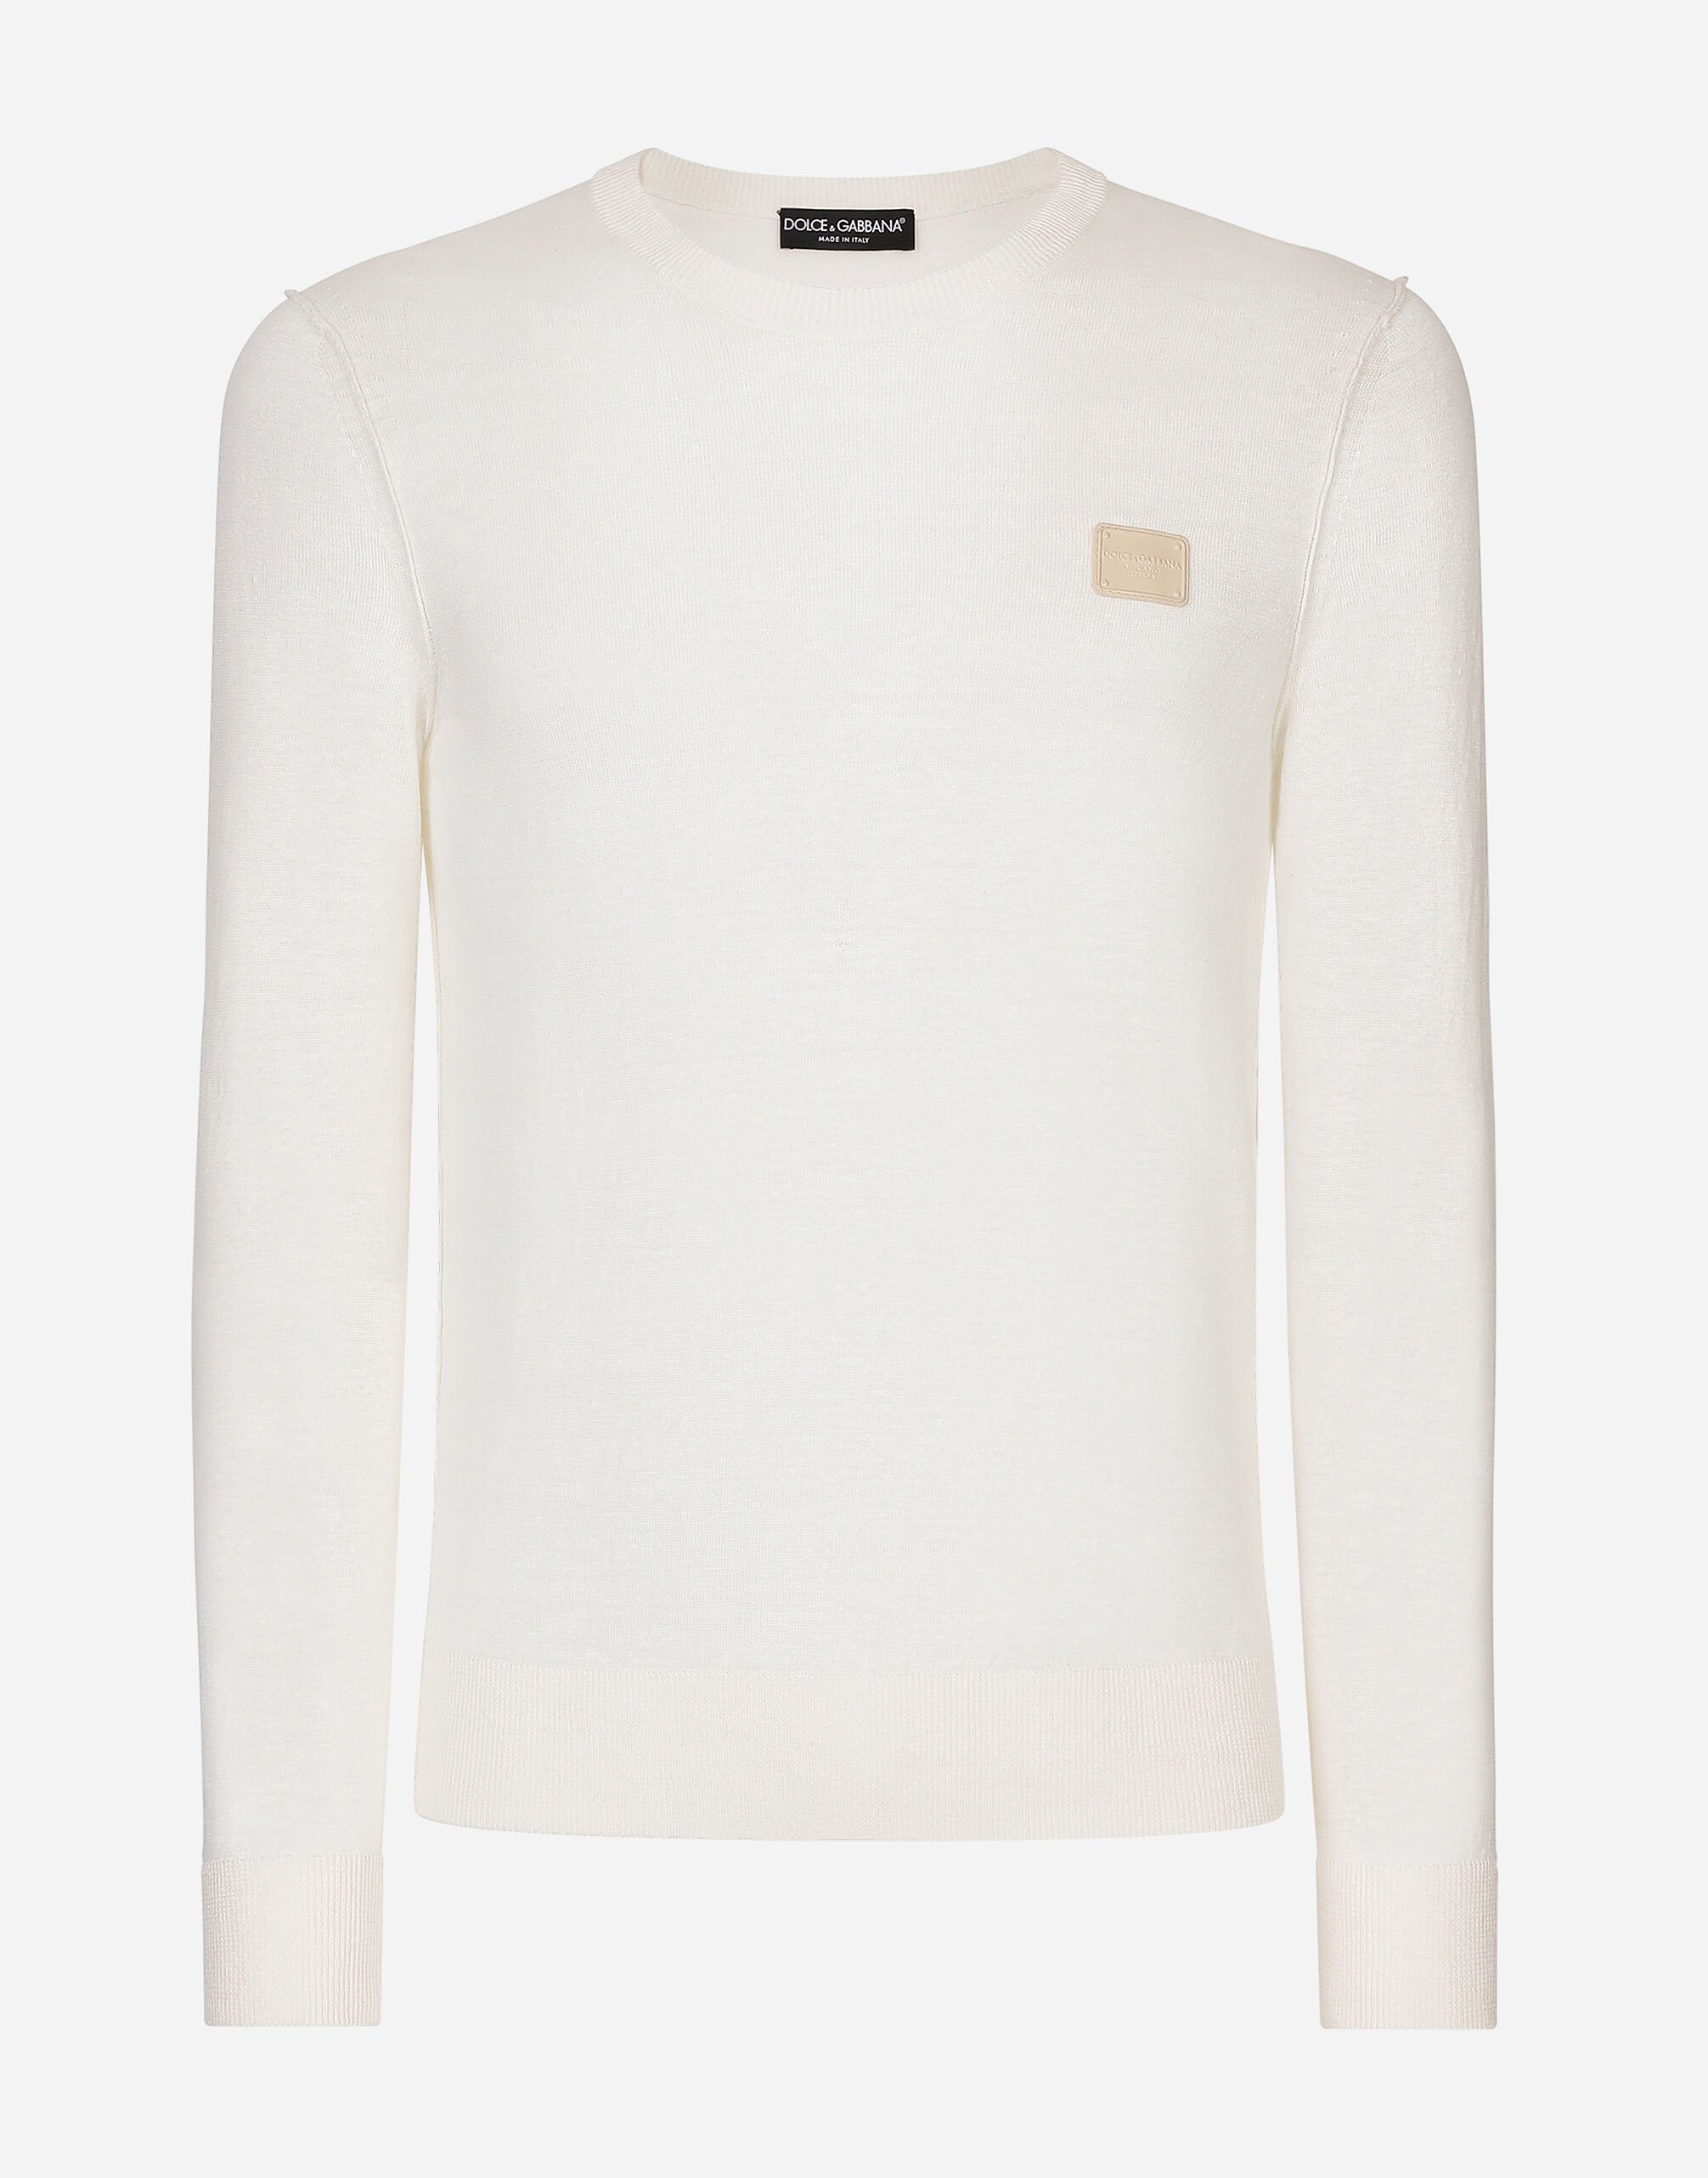 Dolce & Gabbana Linen round-neck sweater with branded tag Print G5IX8THS5RU